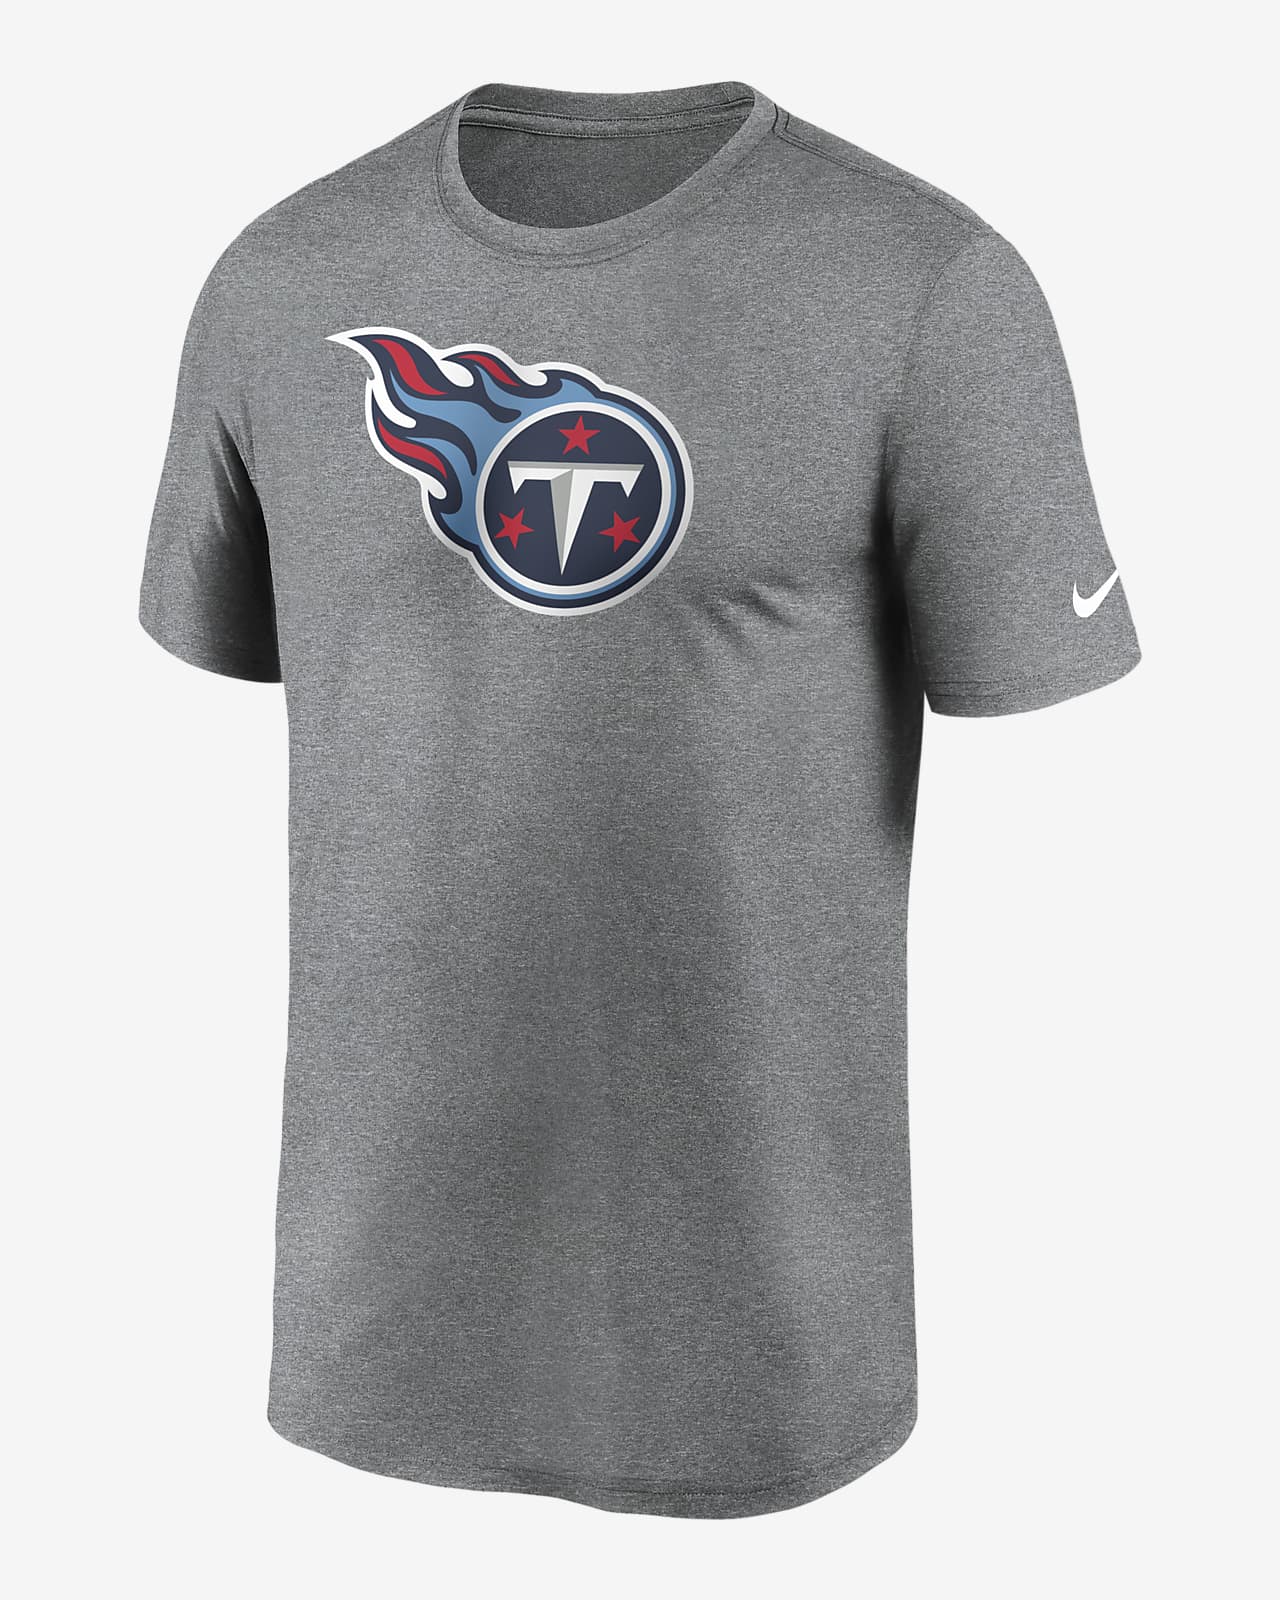 Nike Dri-FIT Logo Legend (NFL Tennessee Titans) Men's T-Shirt